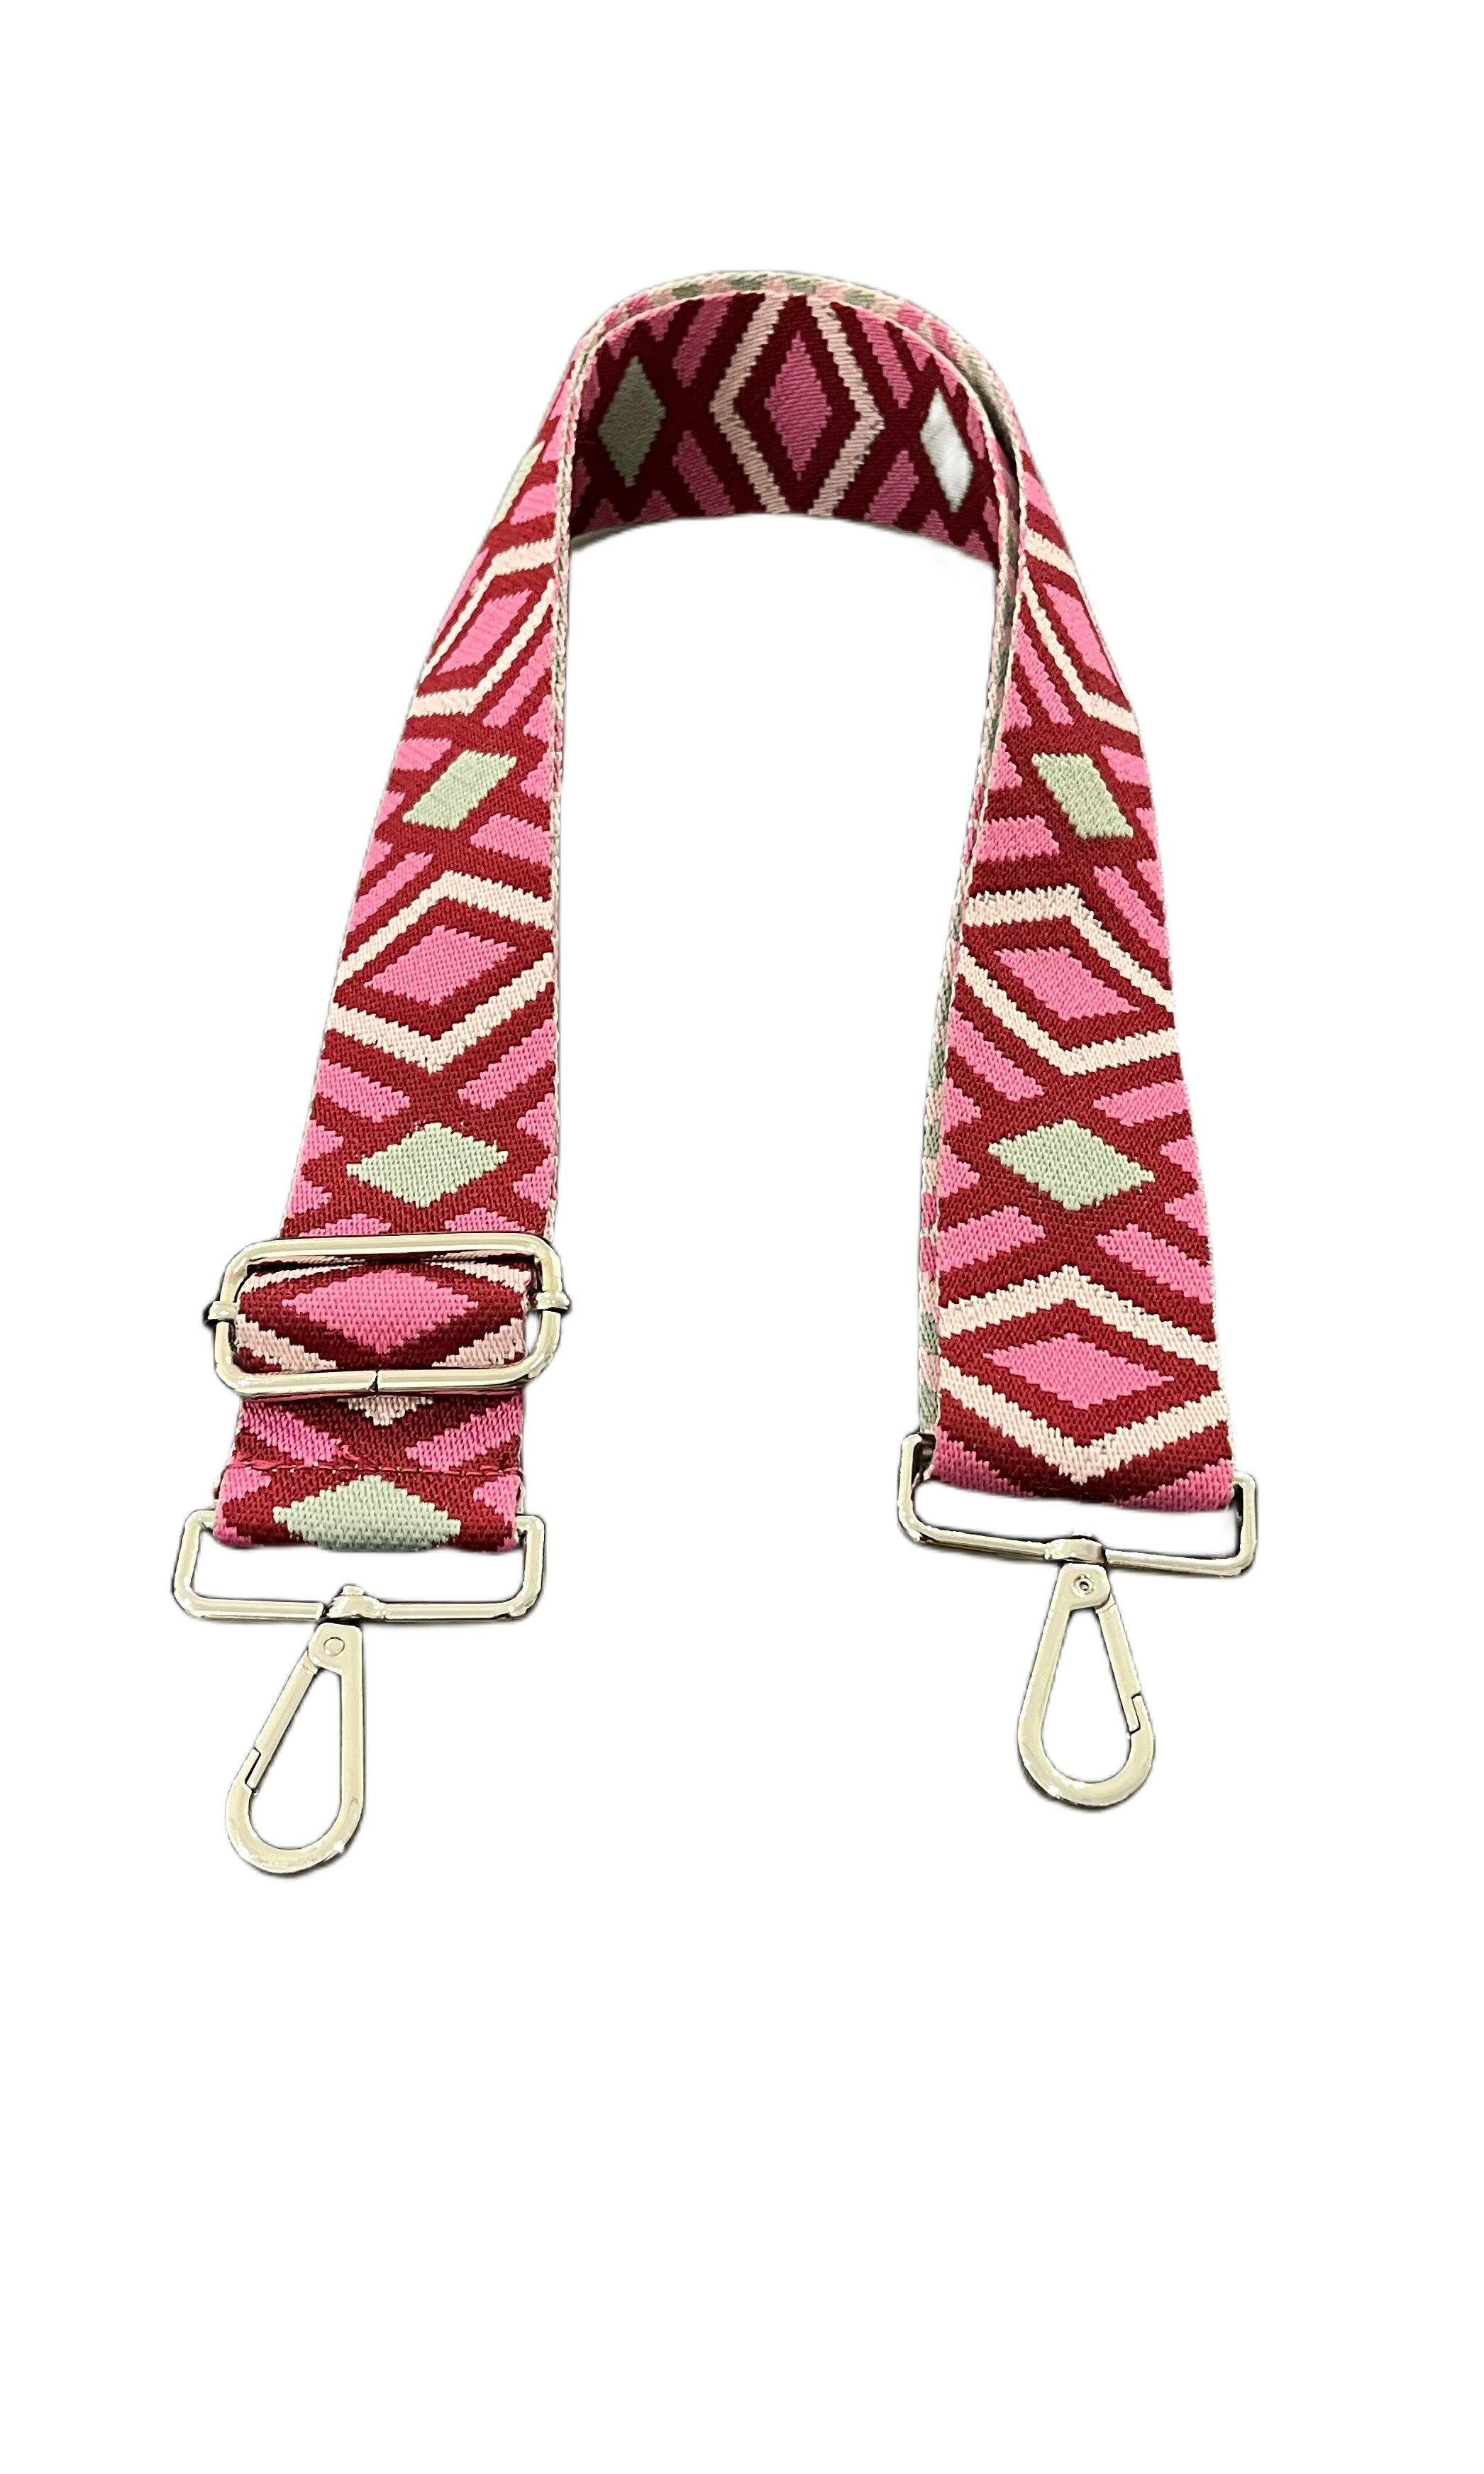 Bodinna diamond bag straps-made in italy